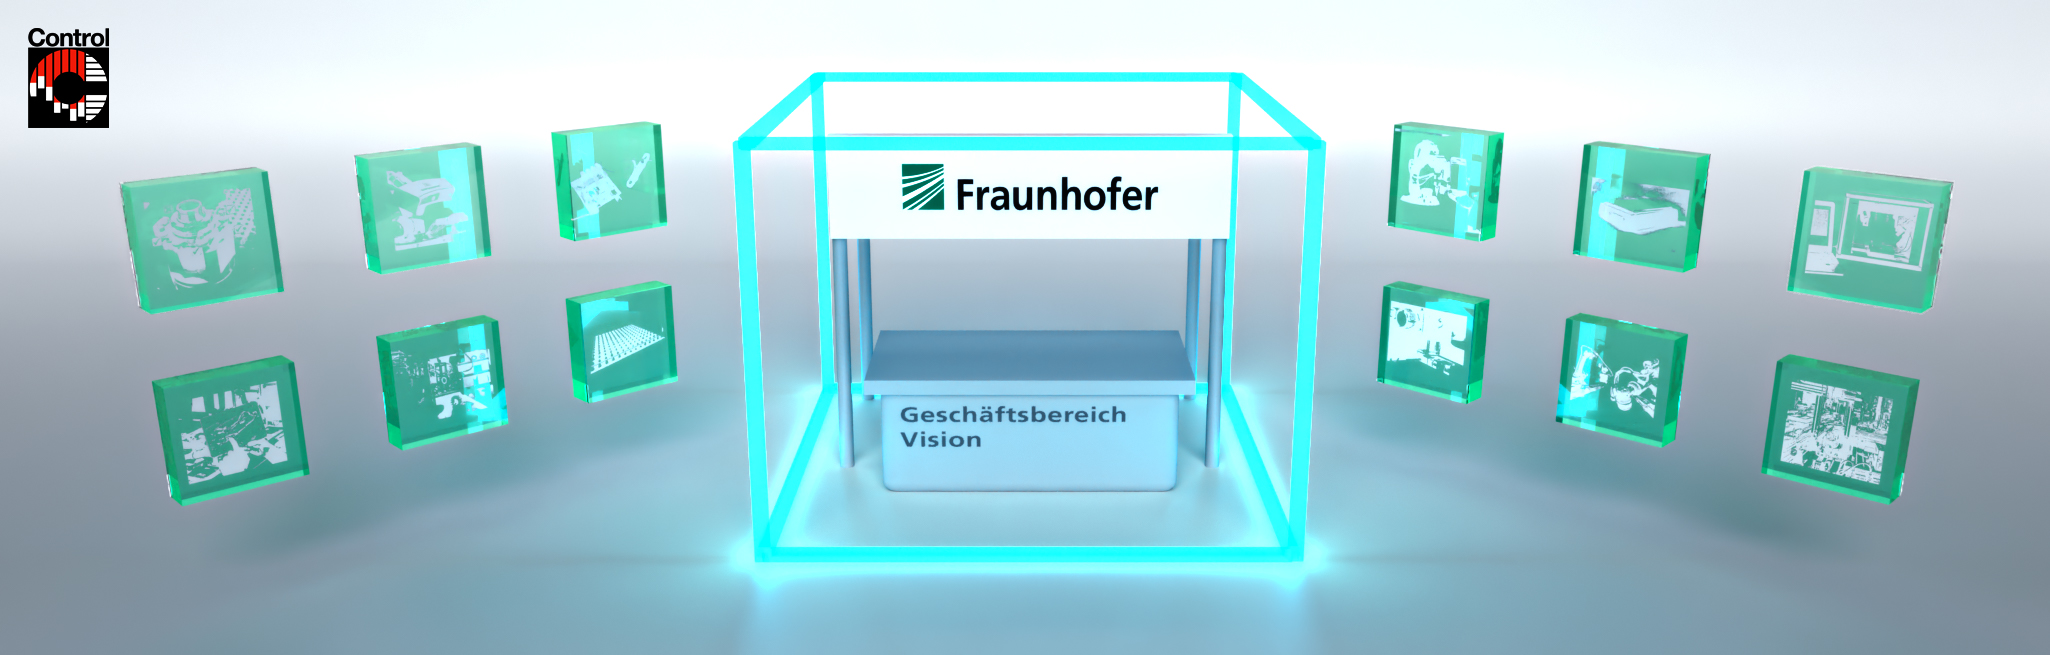 Fraunhofer Vision Control 21 Visual